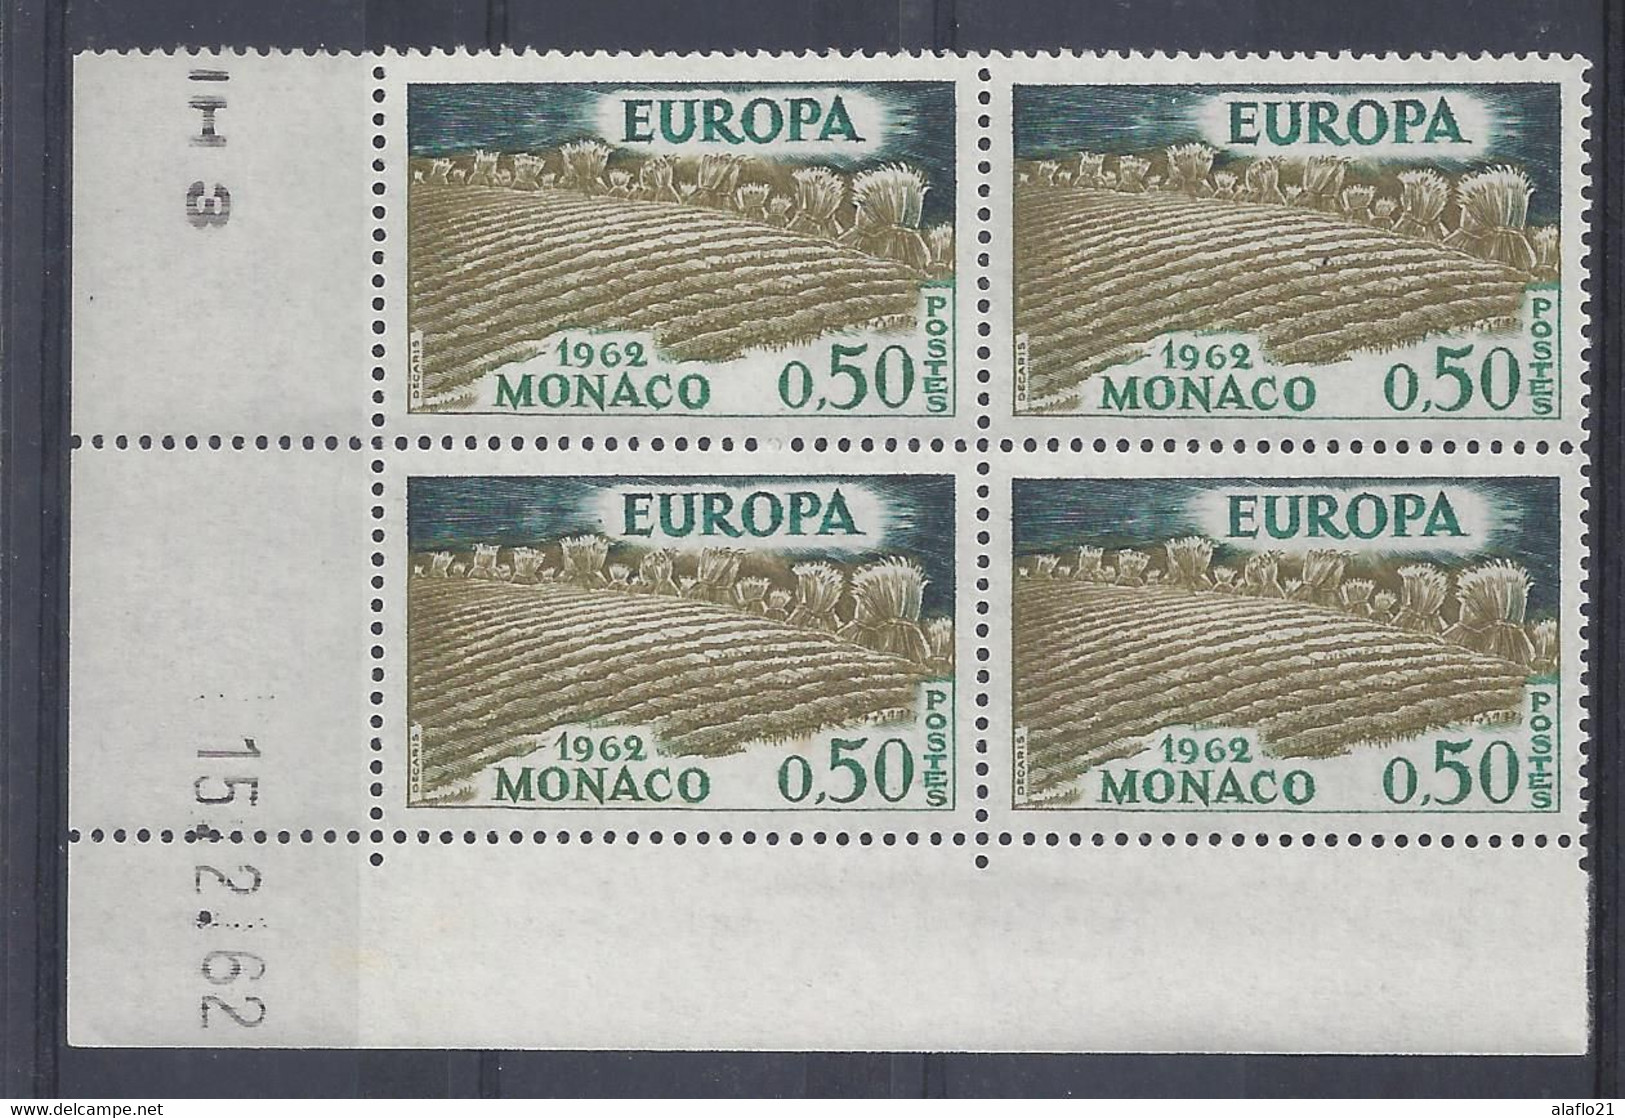 MONACO - N° 572 - EUROPA 1962 - Bloc De 4 COIN DATE - NEUF SANS CHARNIERE - 15/2/62 - Ungebraucht